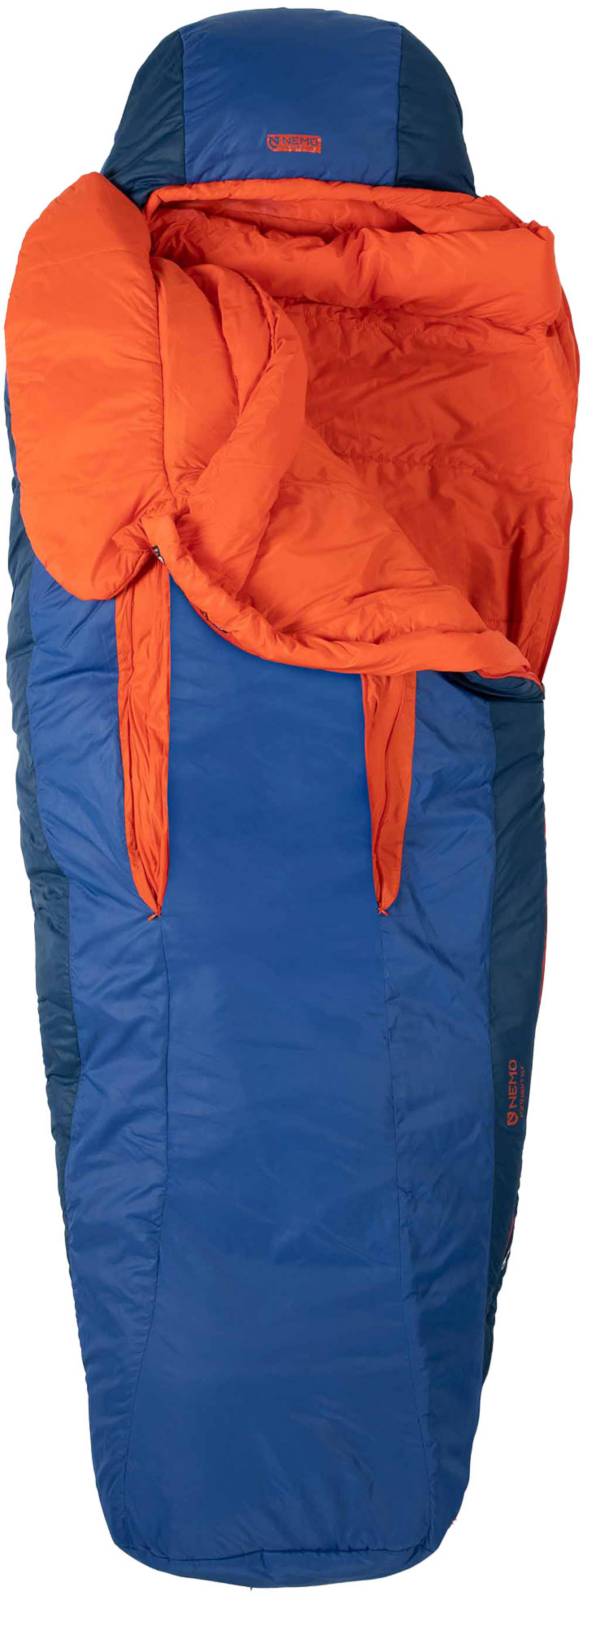 NEMO Men's Forte 35 Sleeping Bag product image